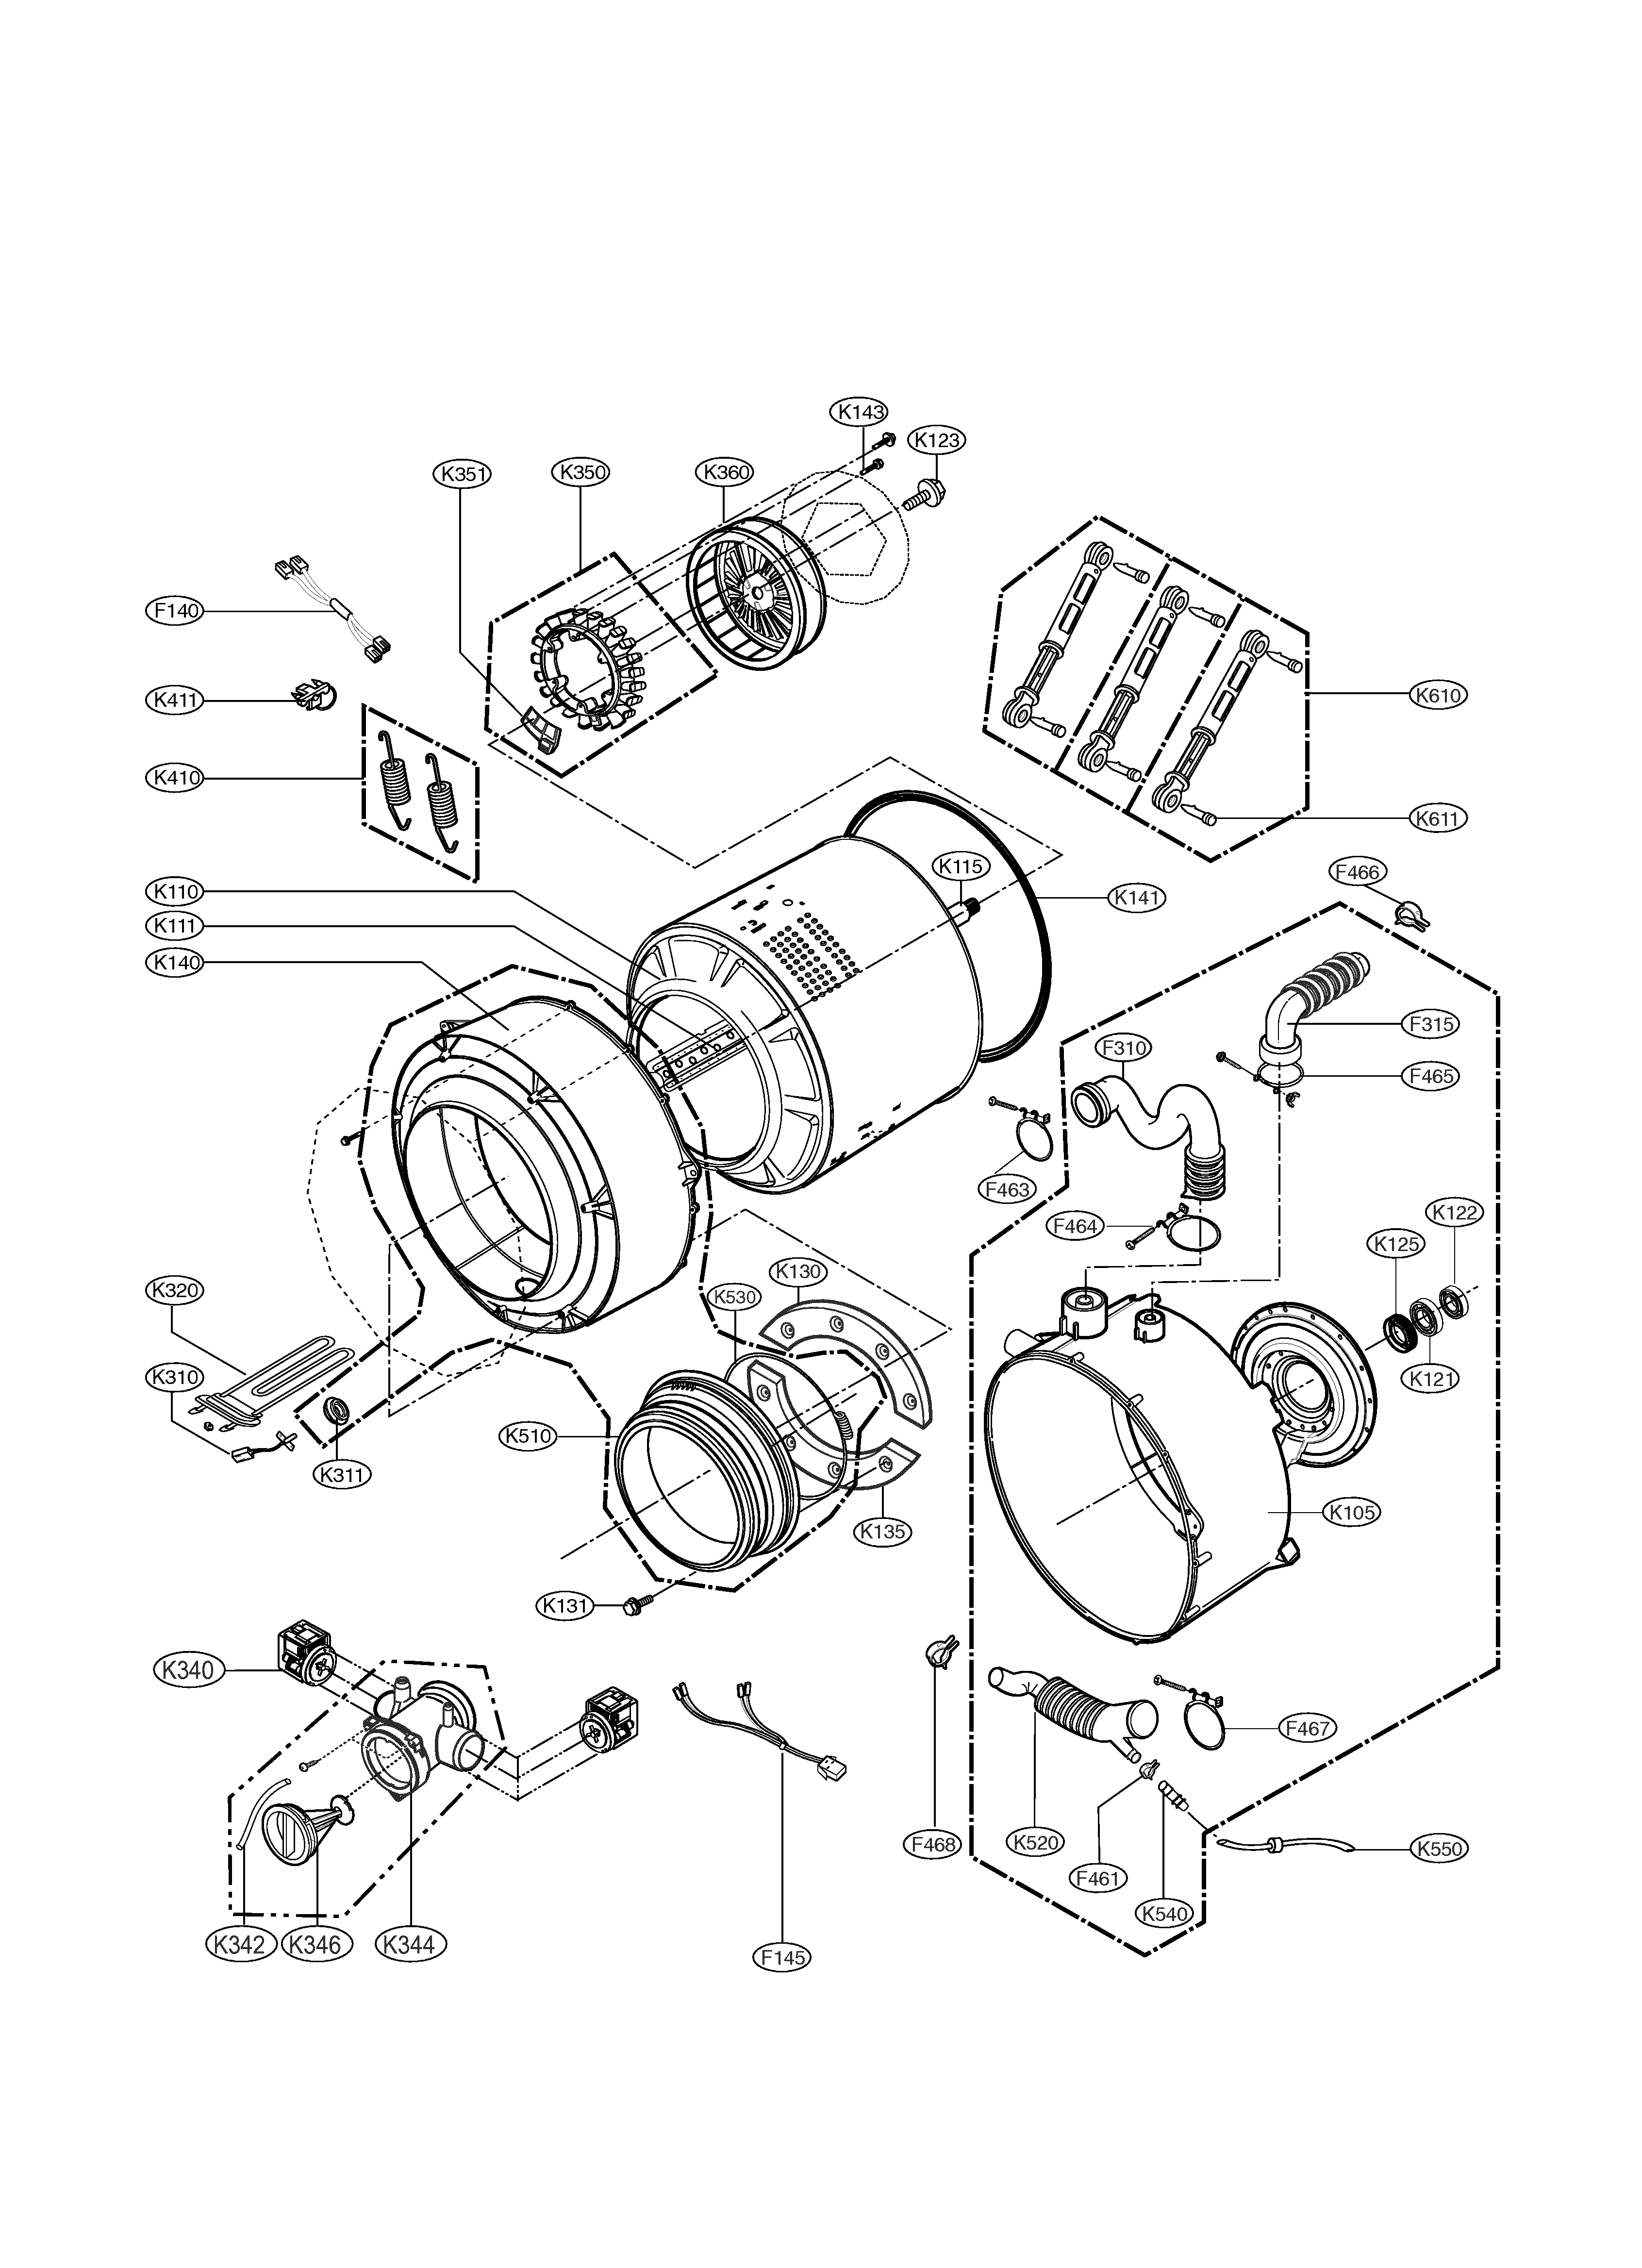 Lg Wm2455hw Washer Parts Sears Partsdirect